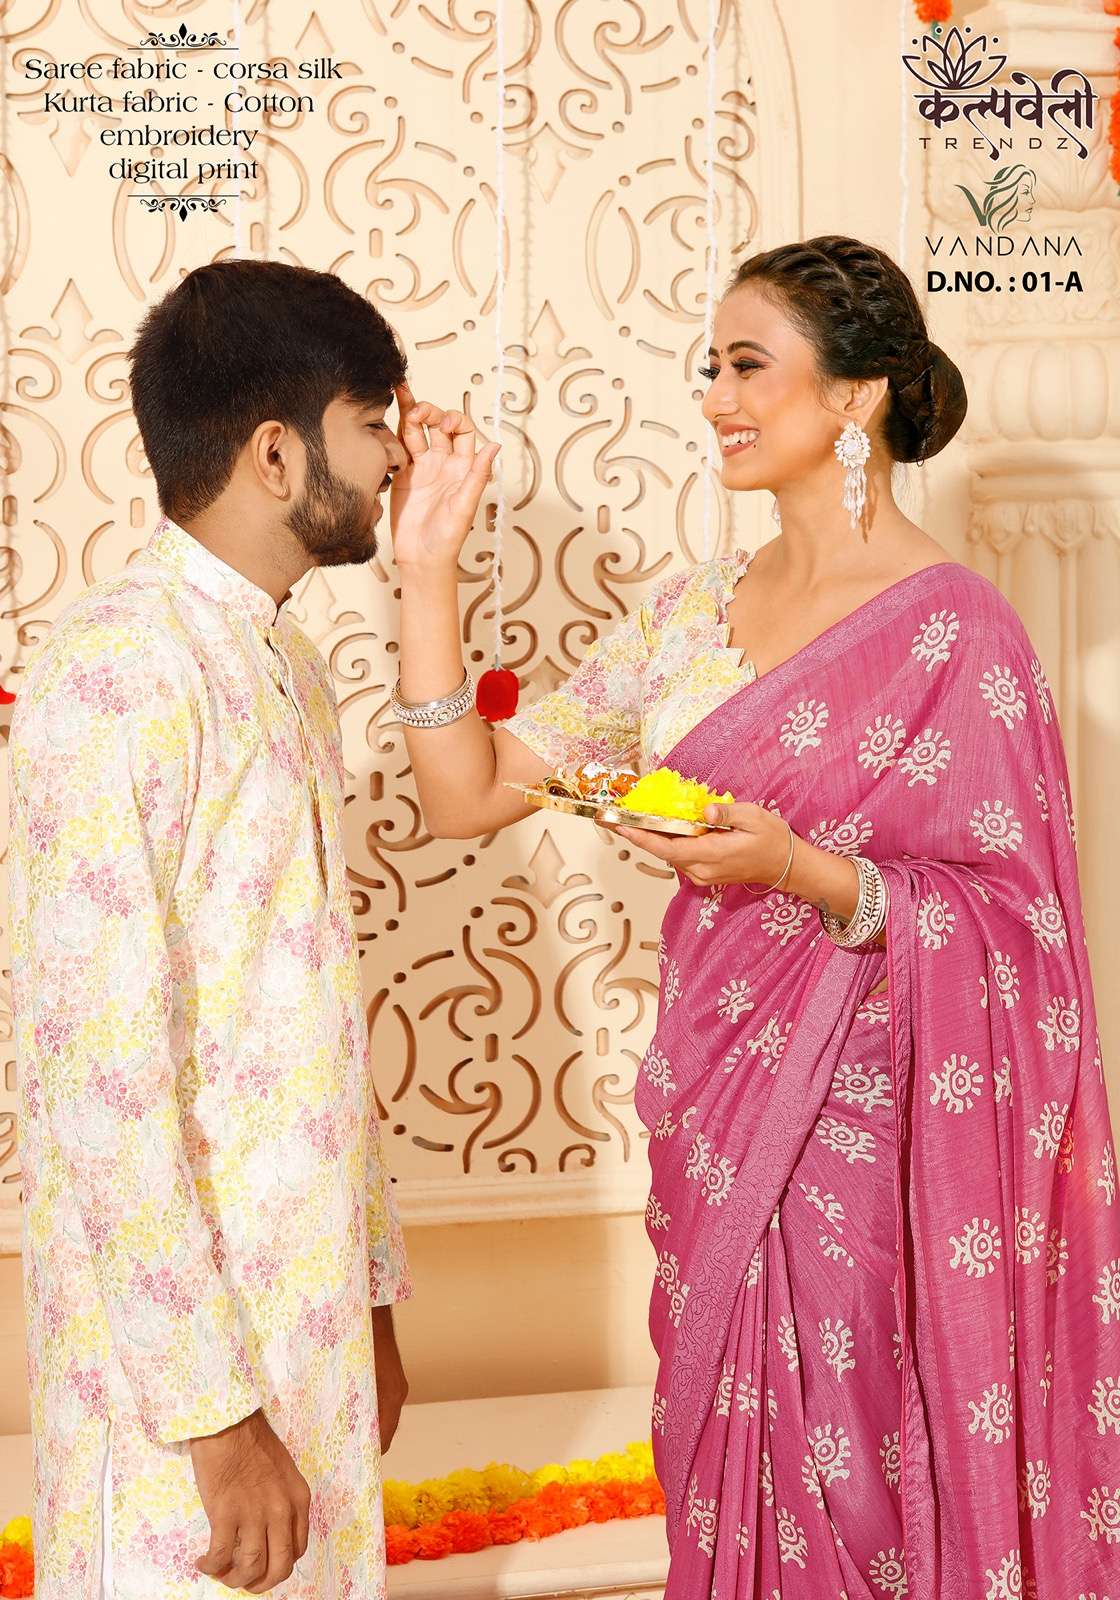 kalpavelly trendz vandana 1 rakhi special amazing print silk saree and unstitch cotton kurta collection